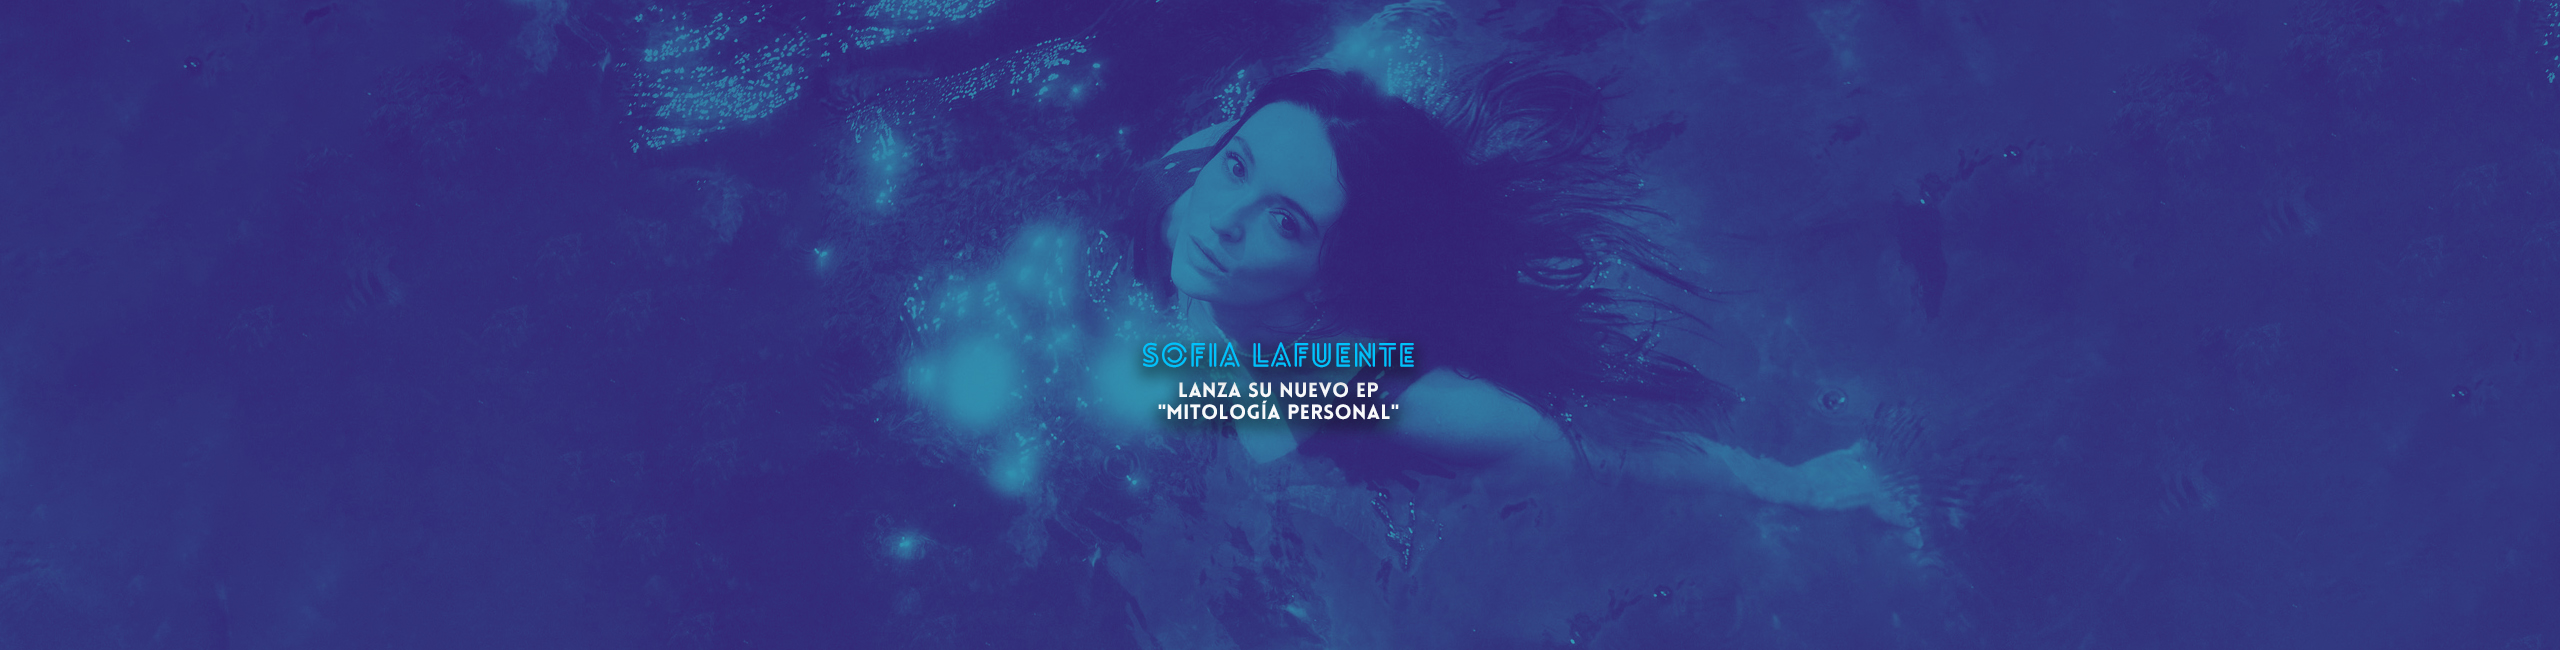 SOFIA LAFUENTE Lanza su nuevo EP “Mitología Personal”